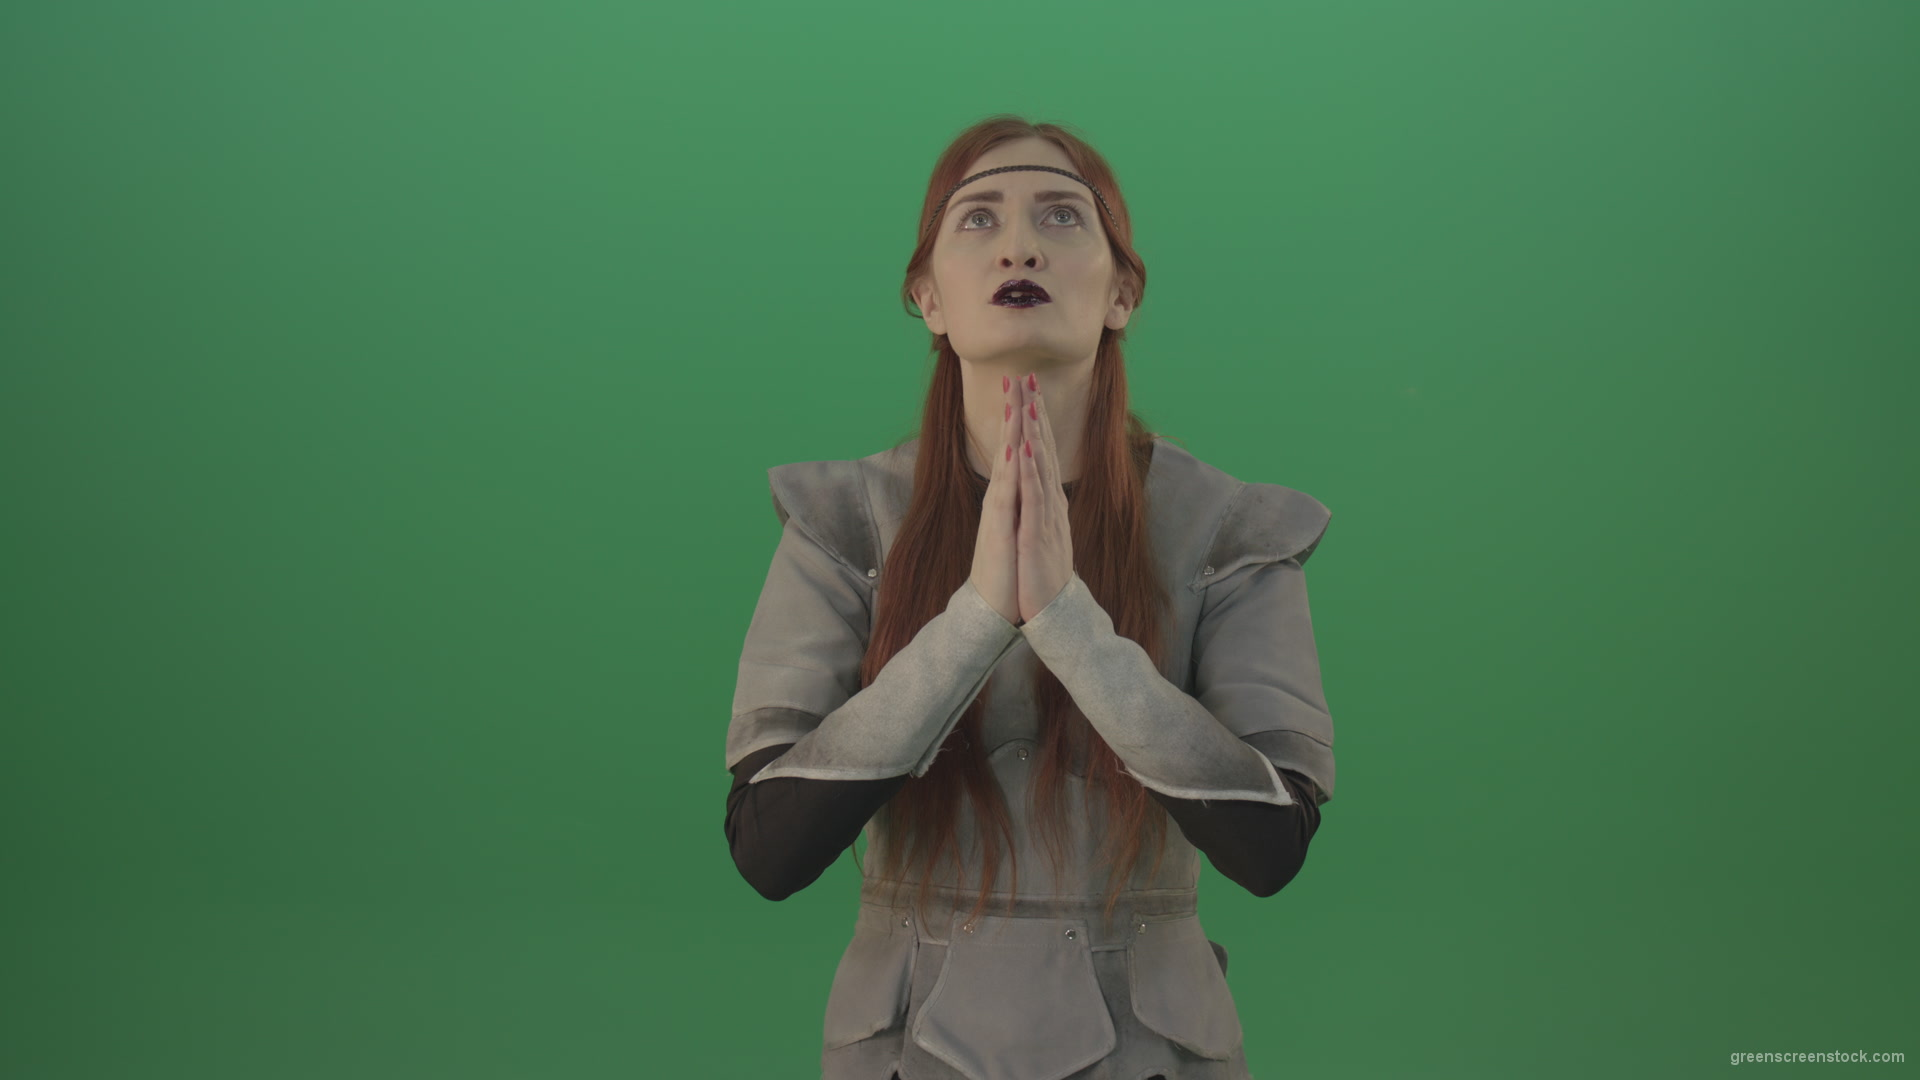 Red-hair-girl-praying-god-in-medieval-warrior-costume-in-green-screen-studio_005 Green Screen Stock